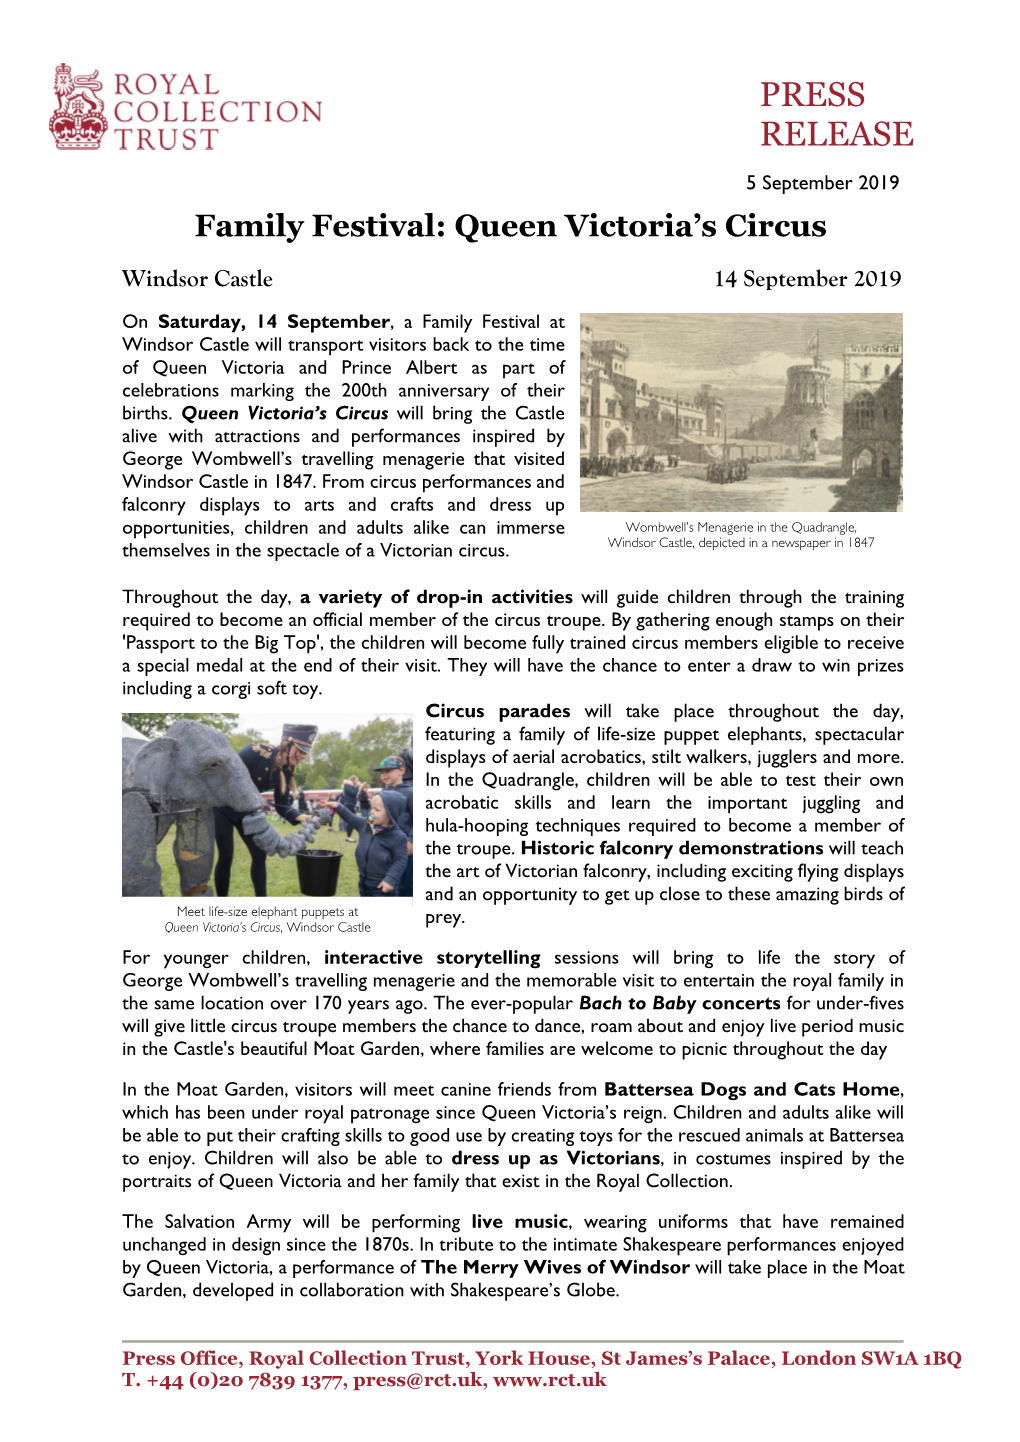 Queen Victoria's Circus